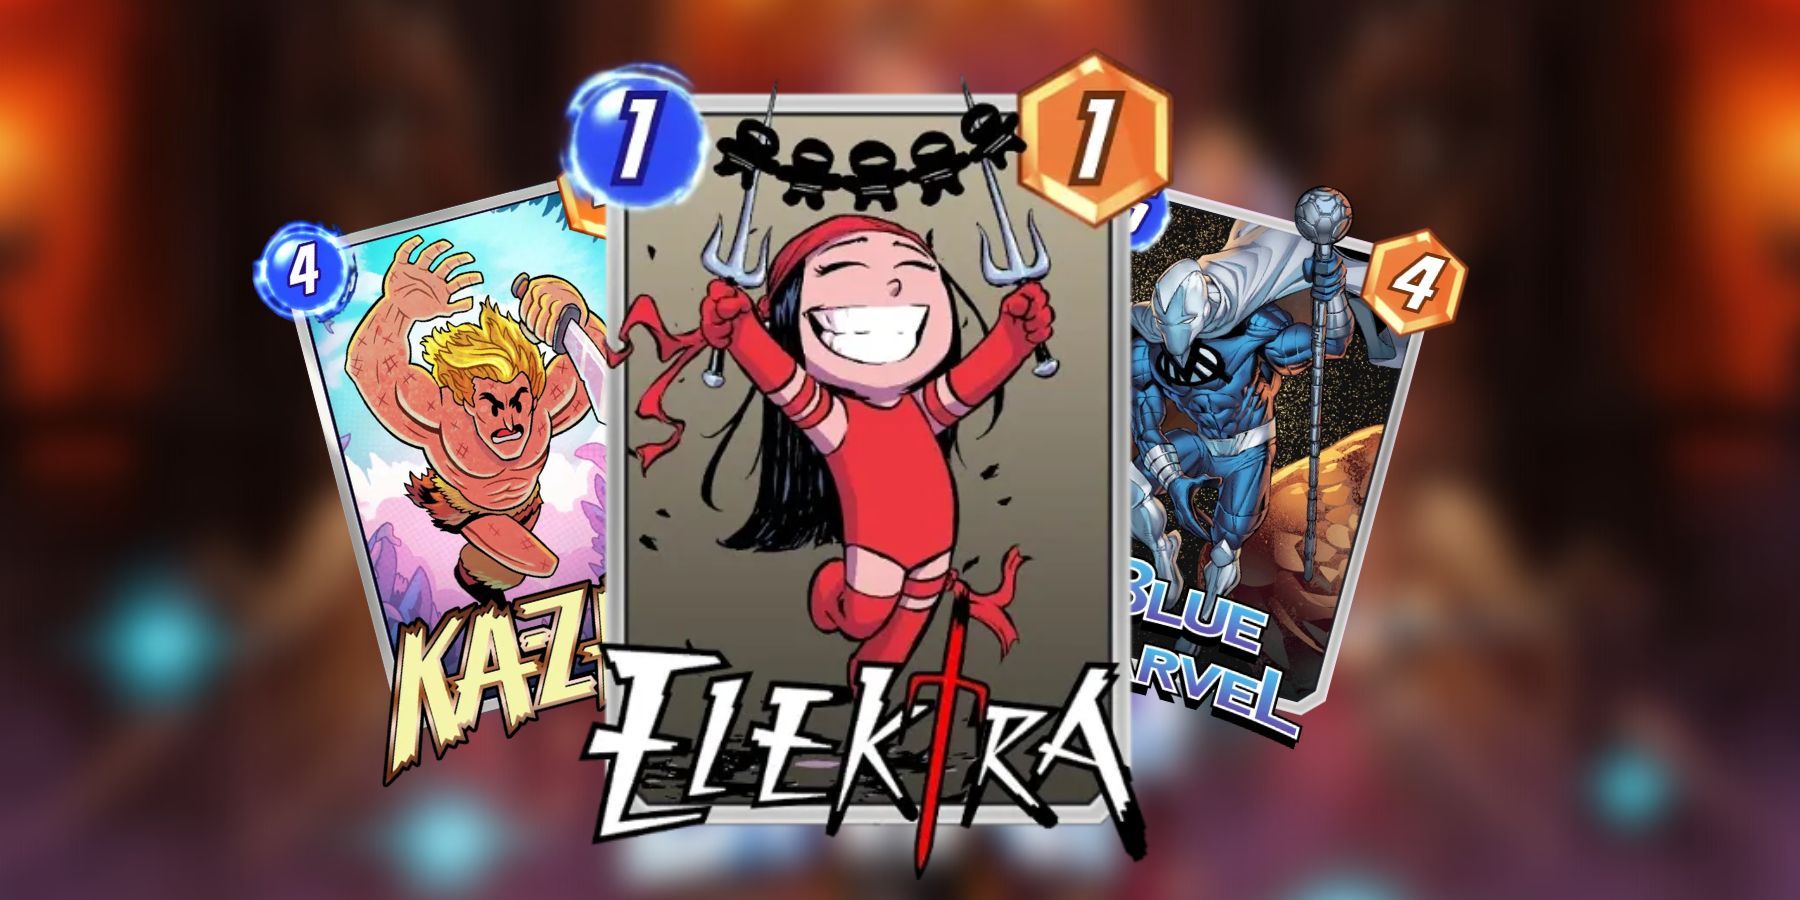 elektra, ka-zar, and blue marvel cards in marvel snap.